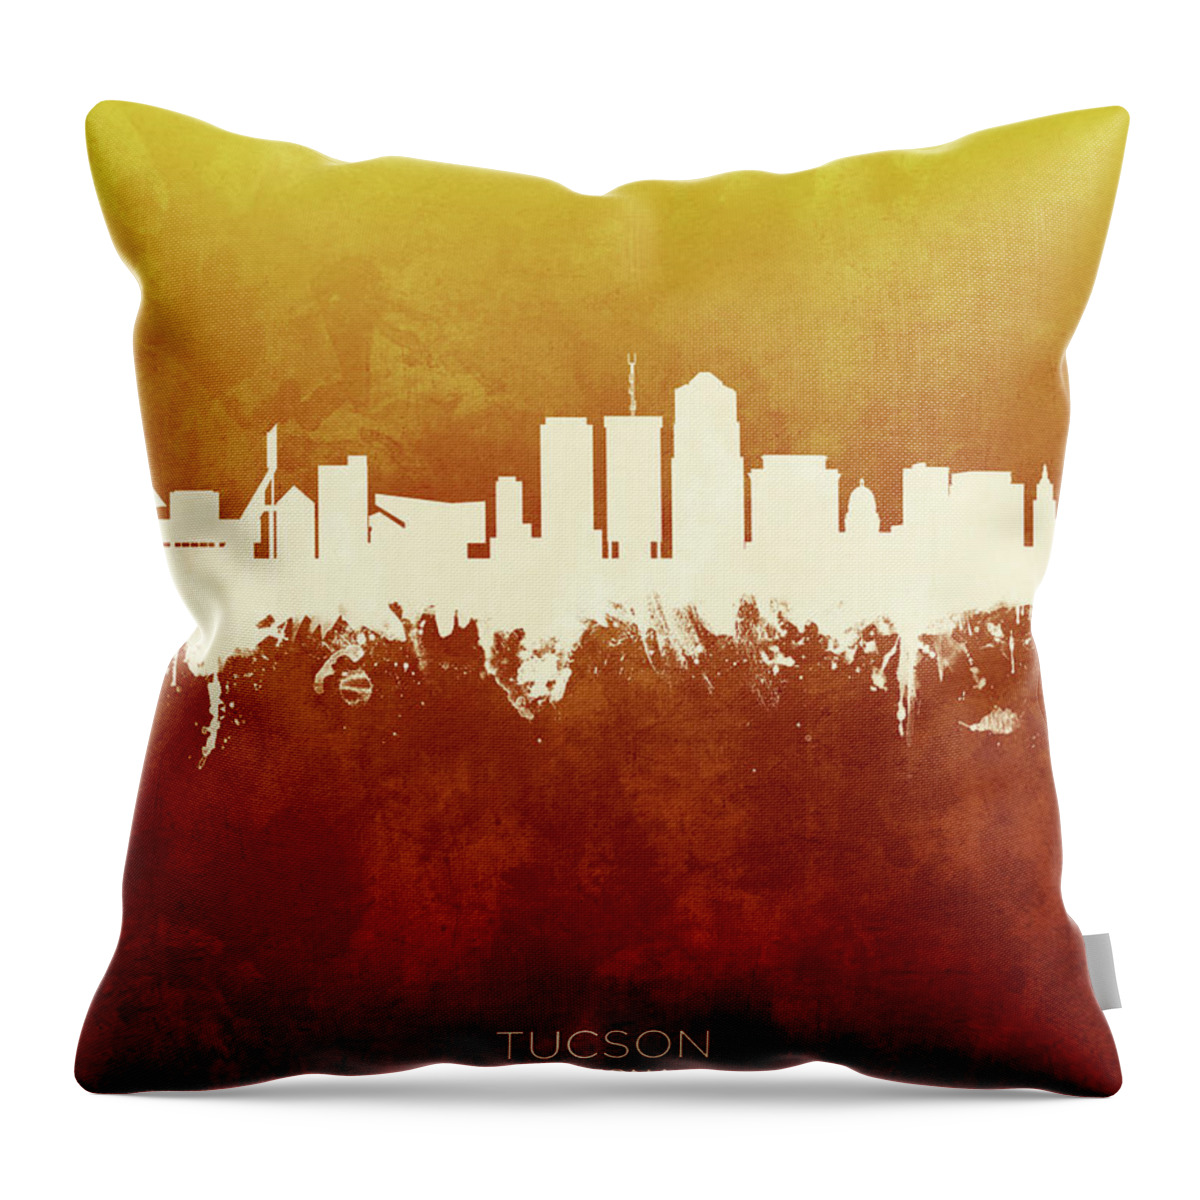 Tucson Throw Pillow featuring the digital art Tucson Arizona Skyline #15 by Michael Tompsett